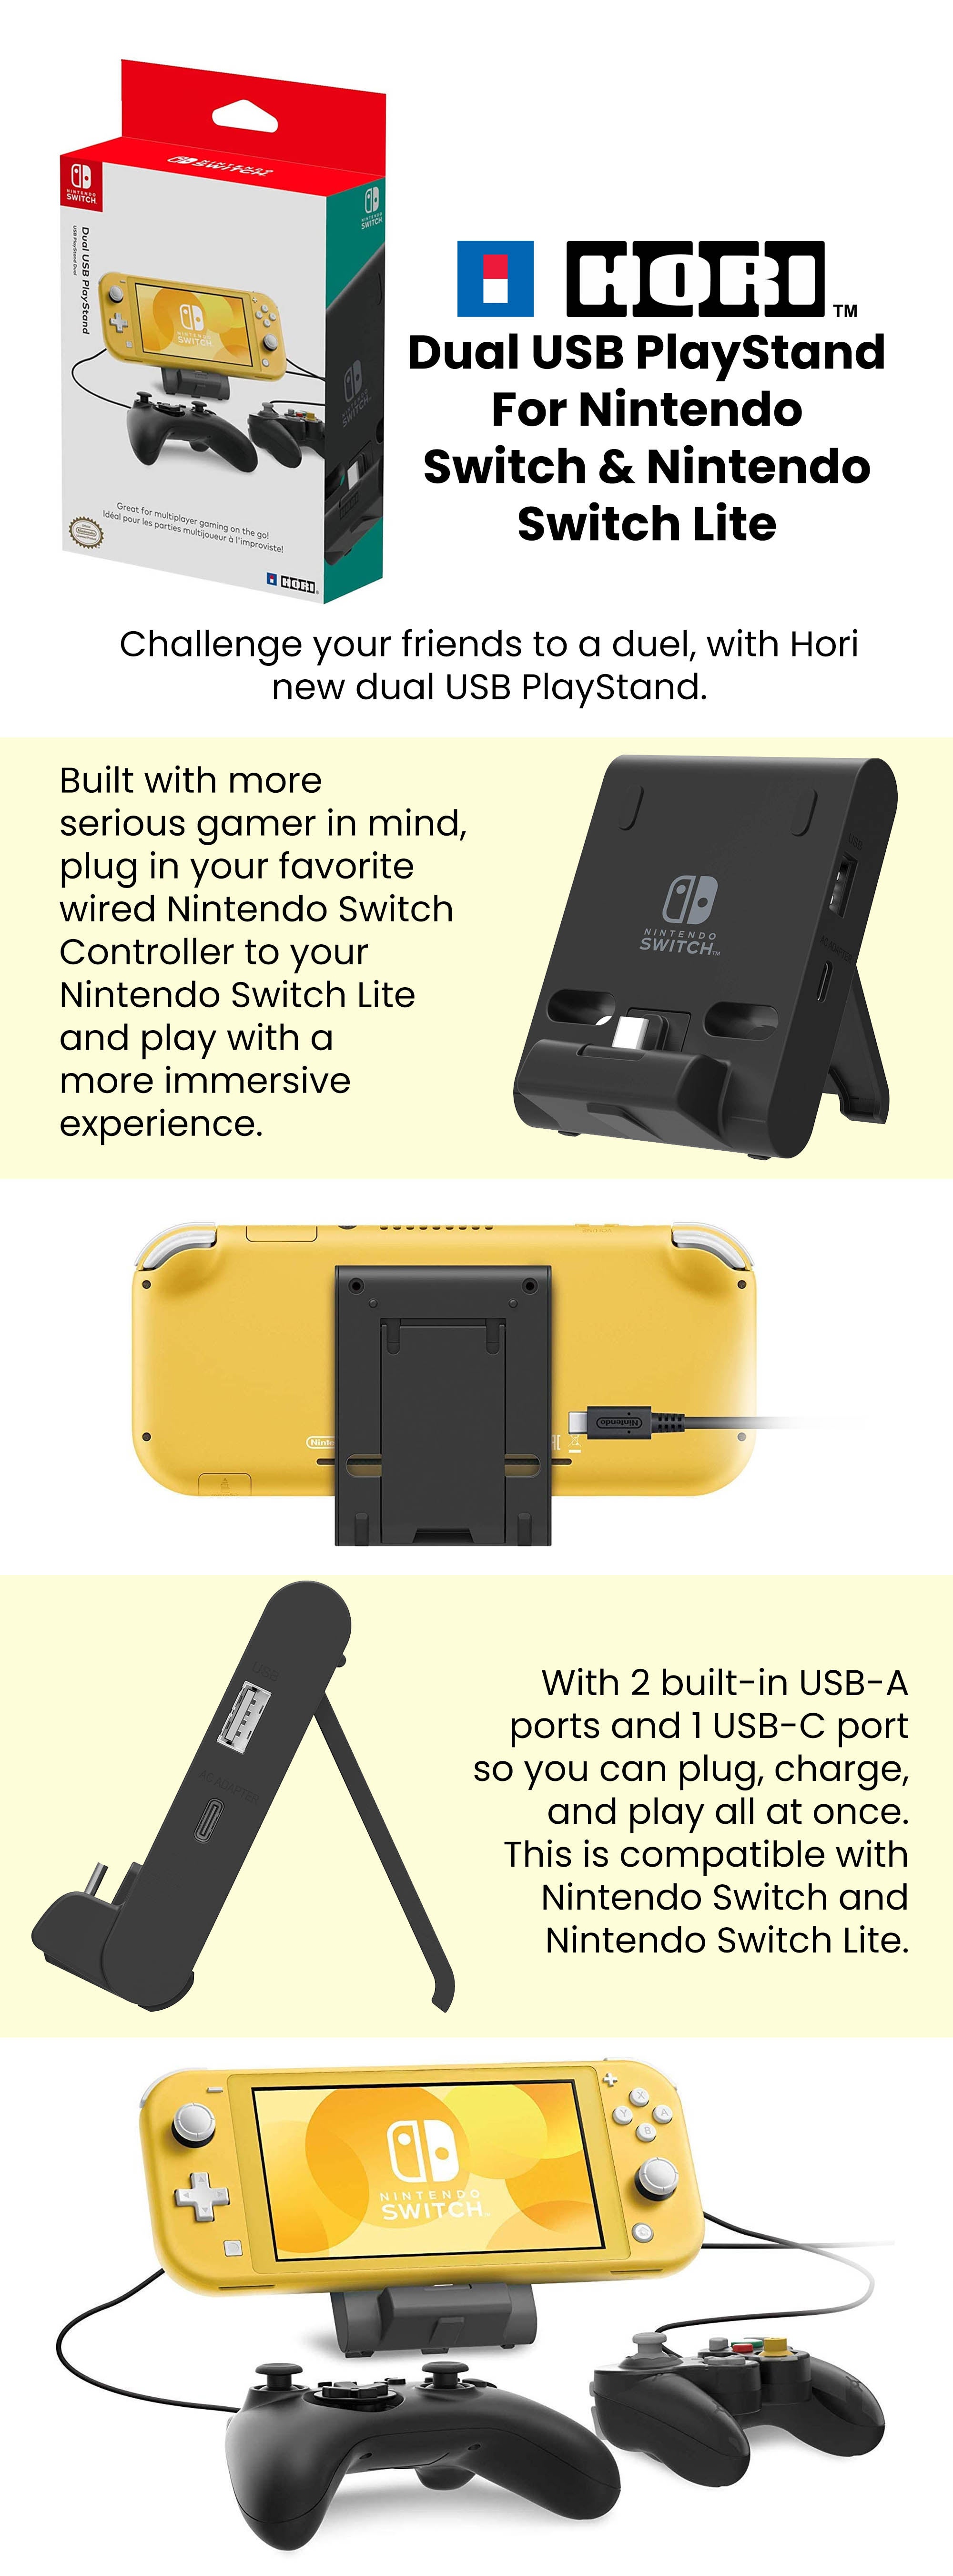 Dual USB PlayStand for Nintendo Switch Lite - HORI USA